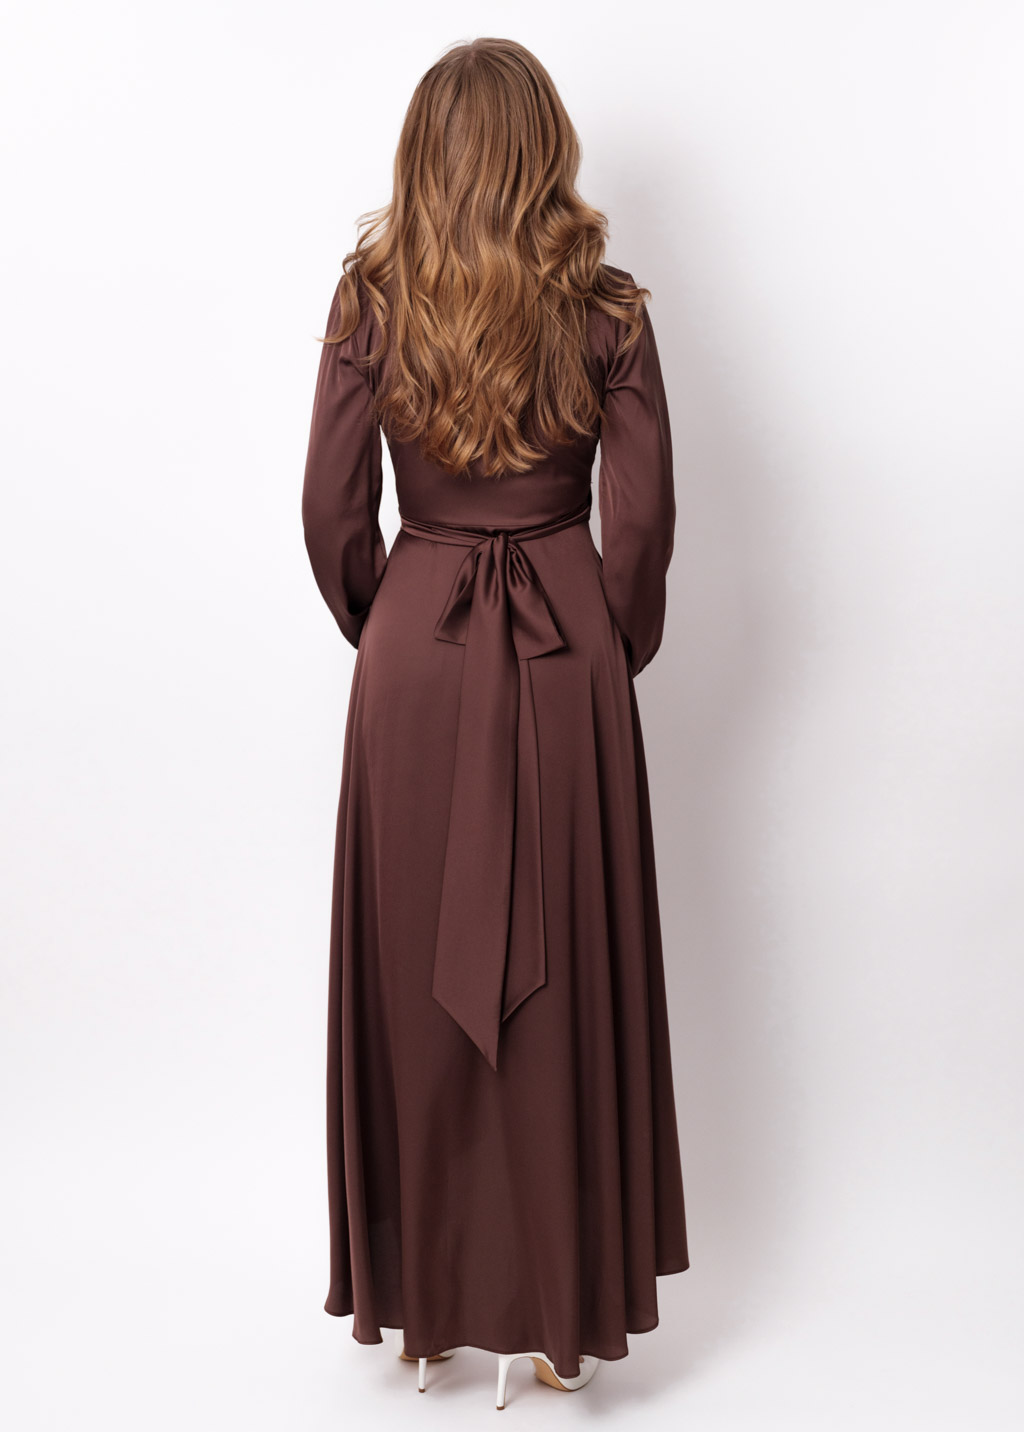 Chocolate brown silk long wrap dress